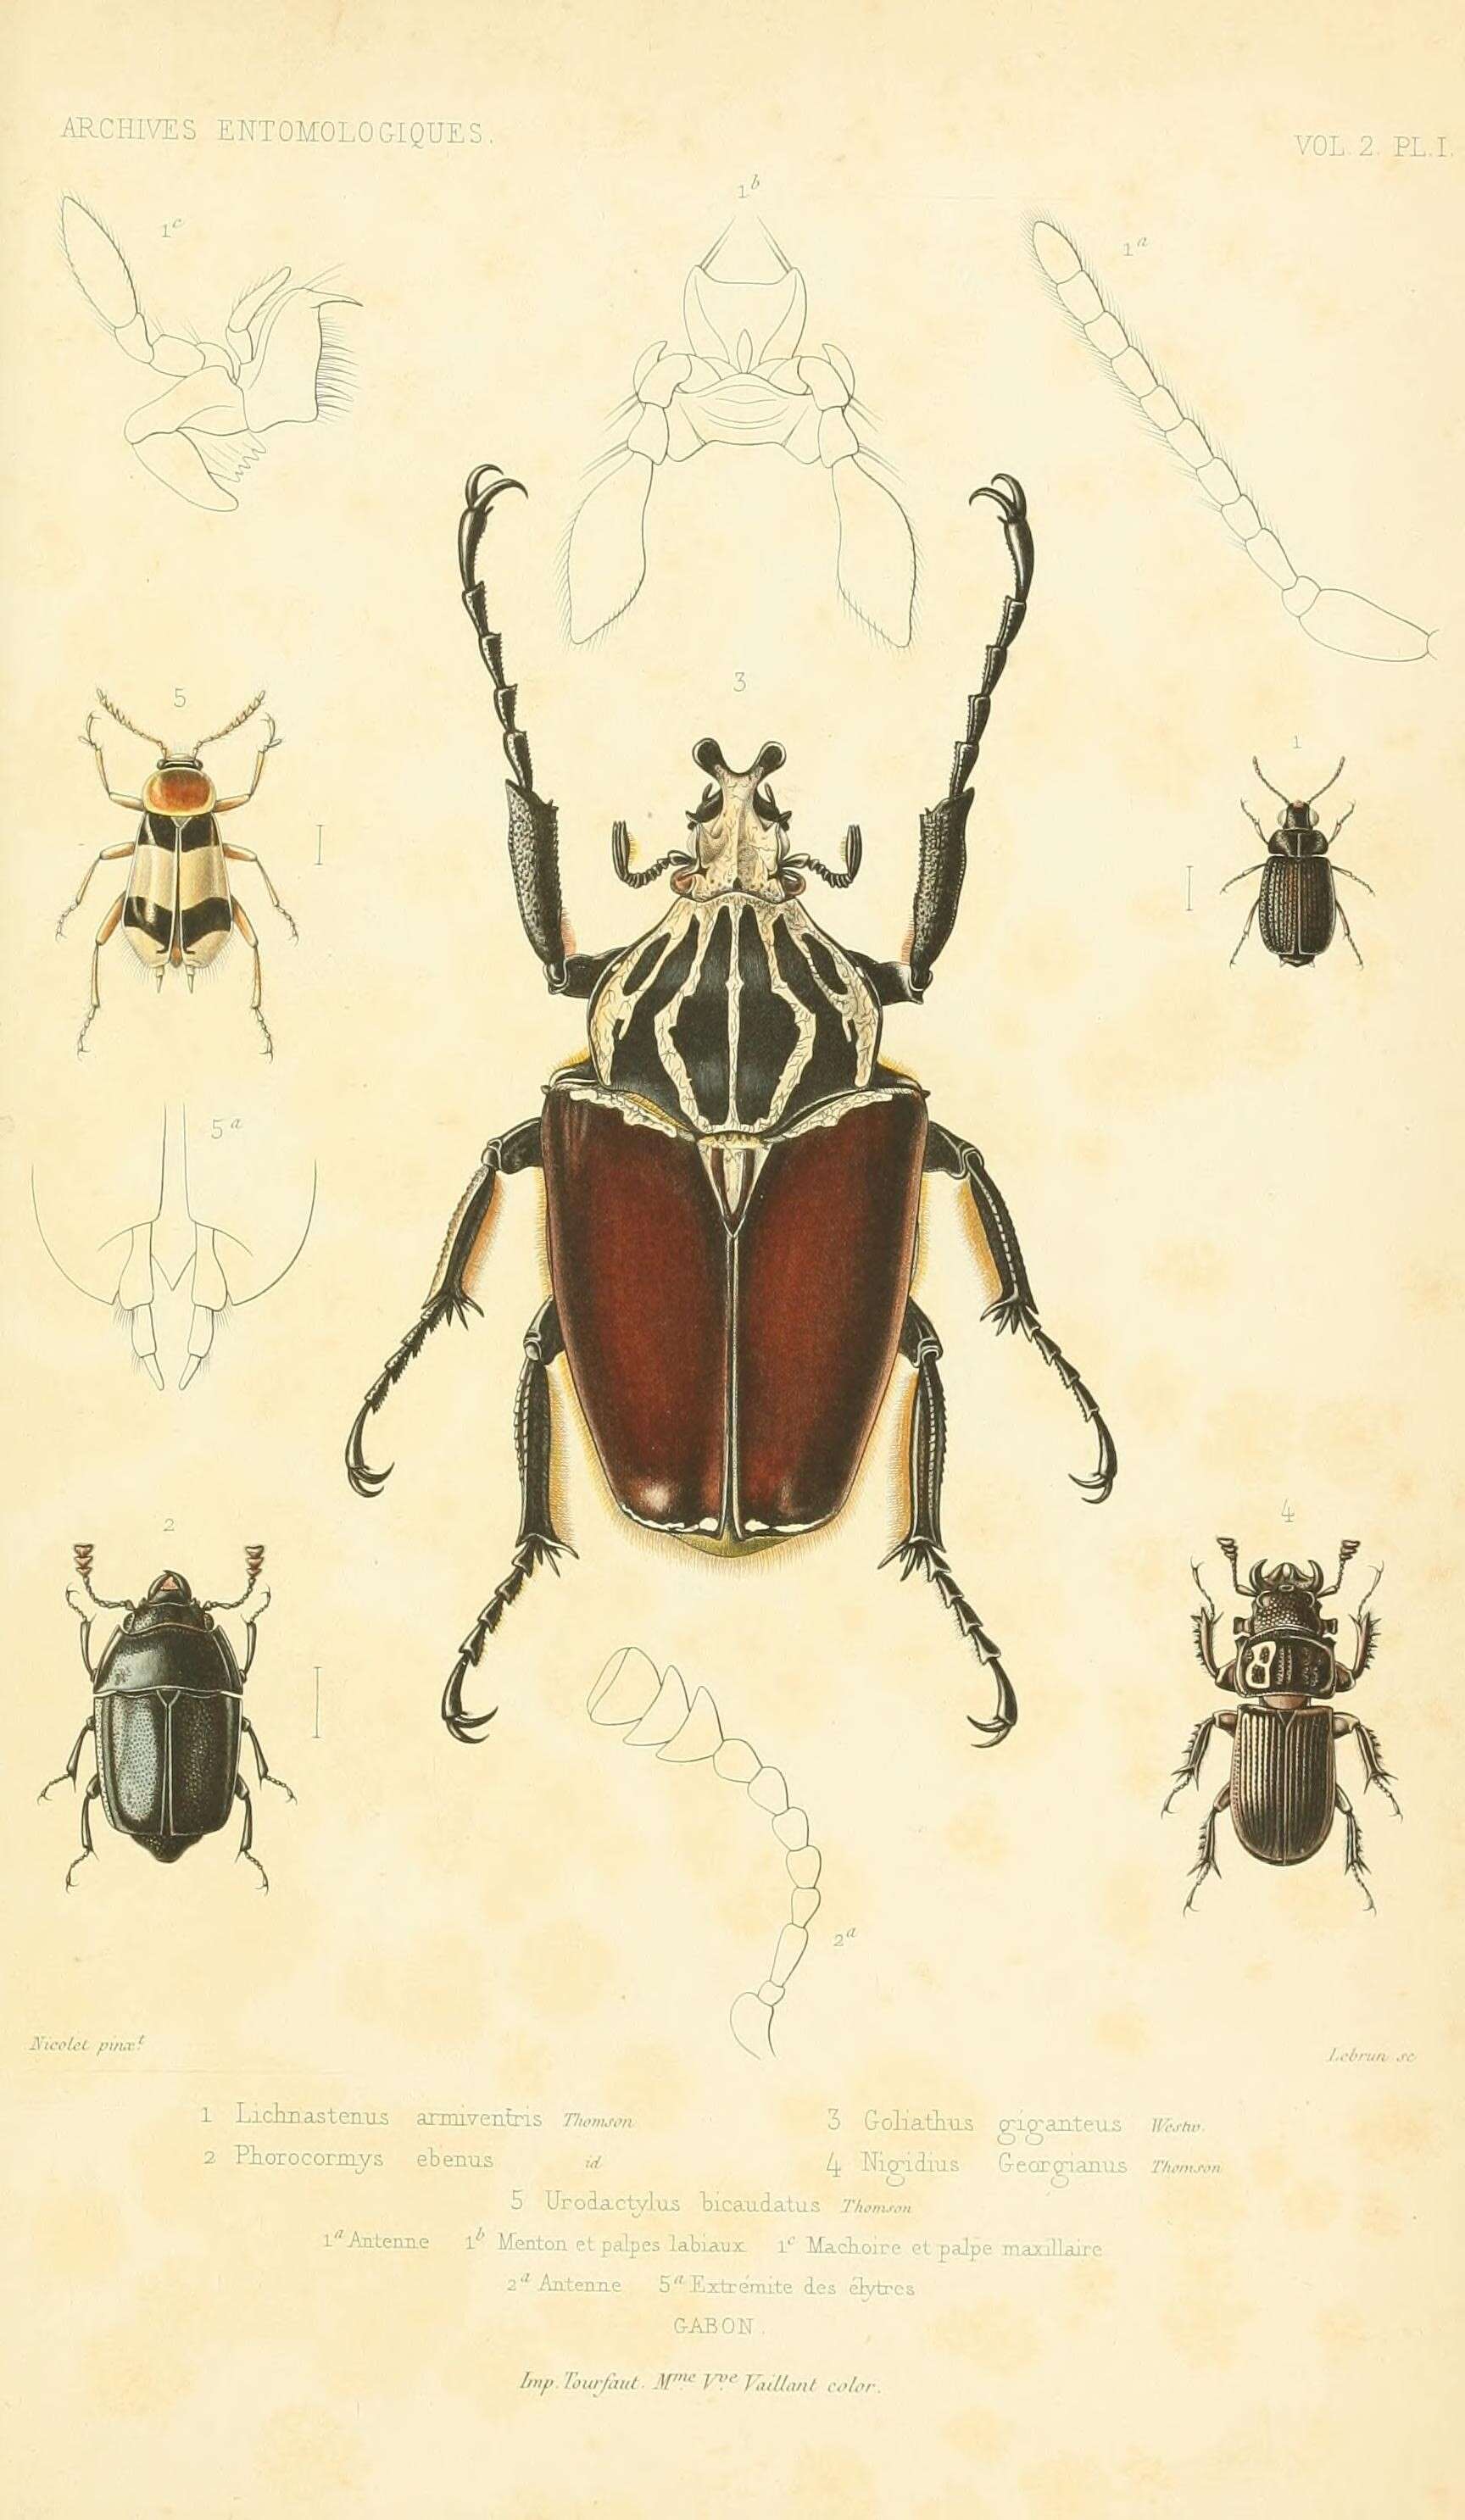 Image of Lichnasthenus armiventris J. Thomson 1858